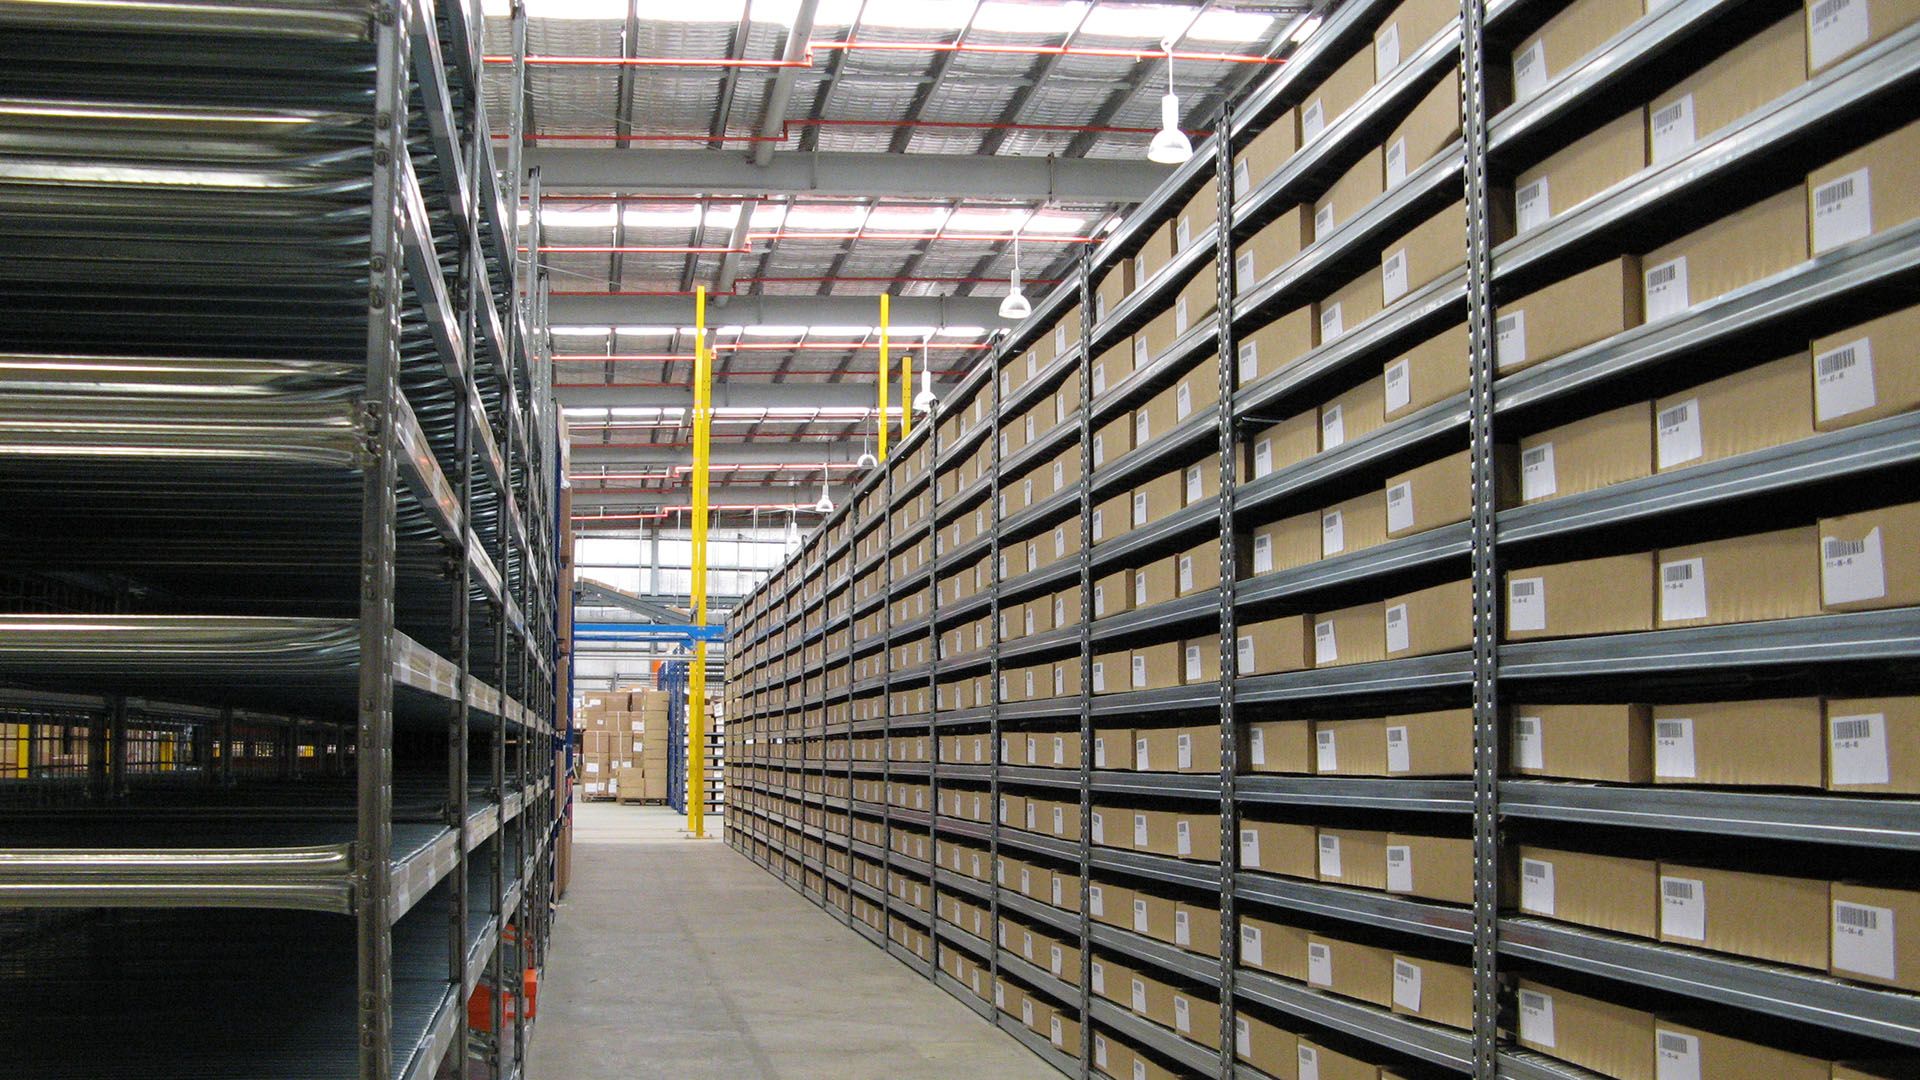 estanteria metalica sistemas dei almacenaje anaqueles metalicos racks  industriales rack metalico racks